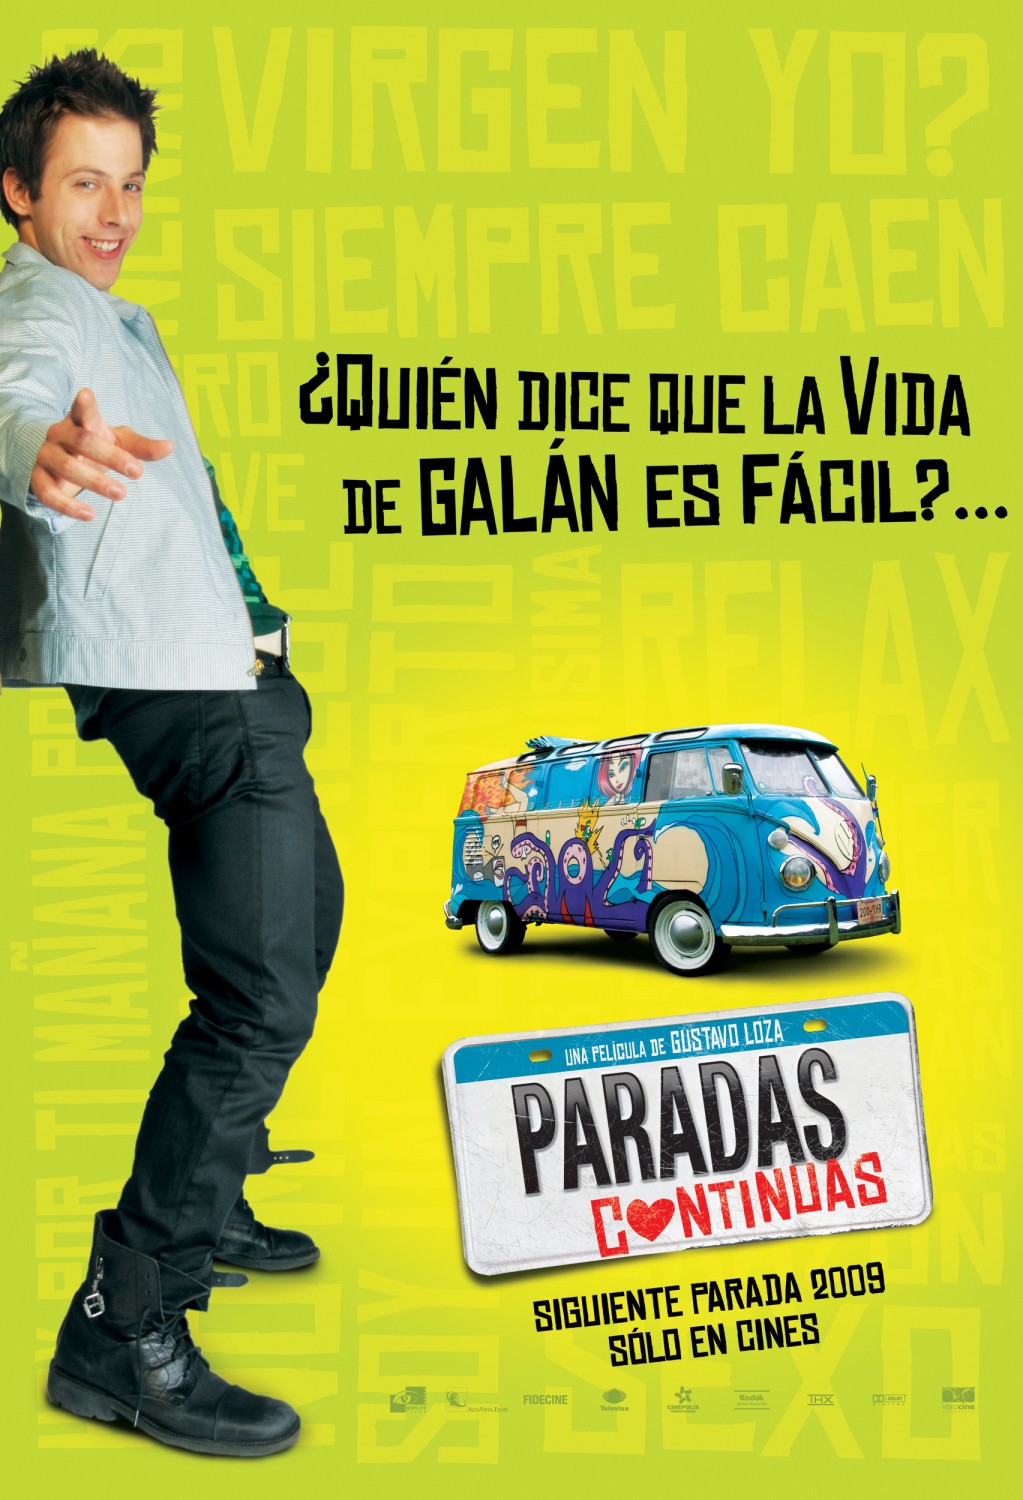 Extra Large Movie Poster Image for Paradas continuas (#3 of 5)